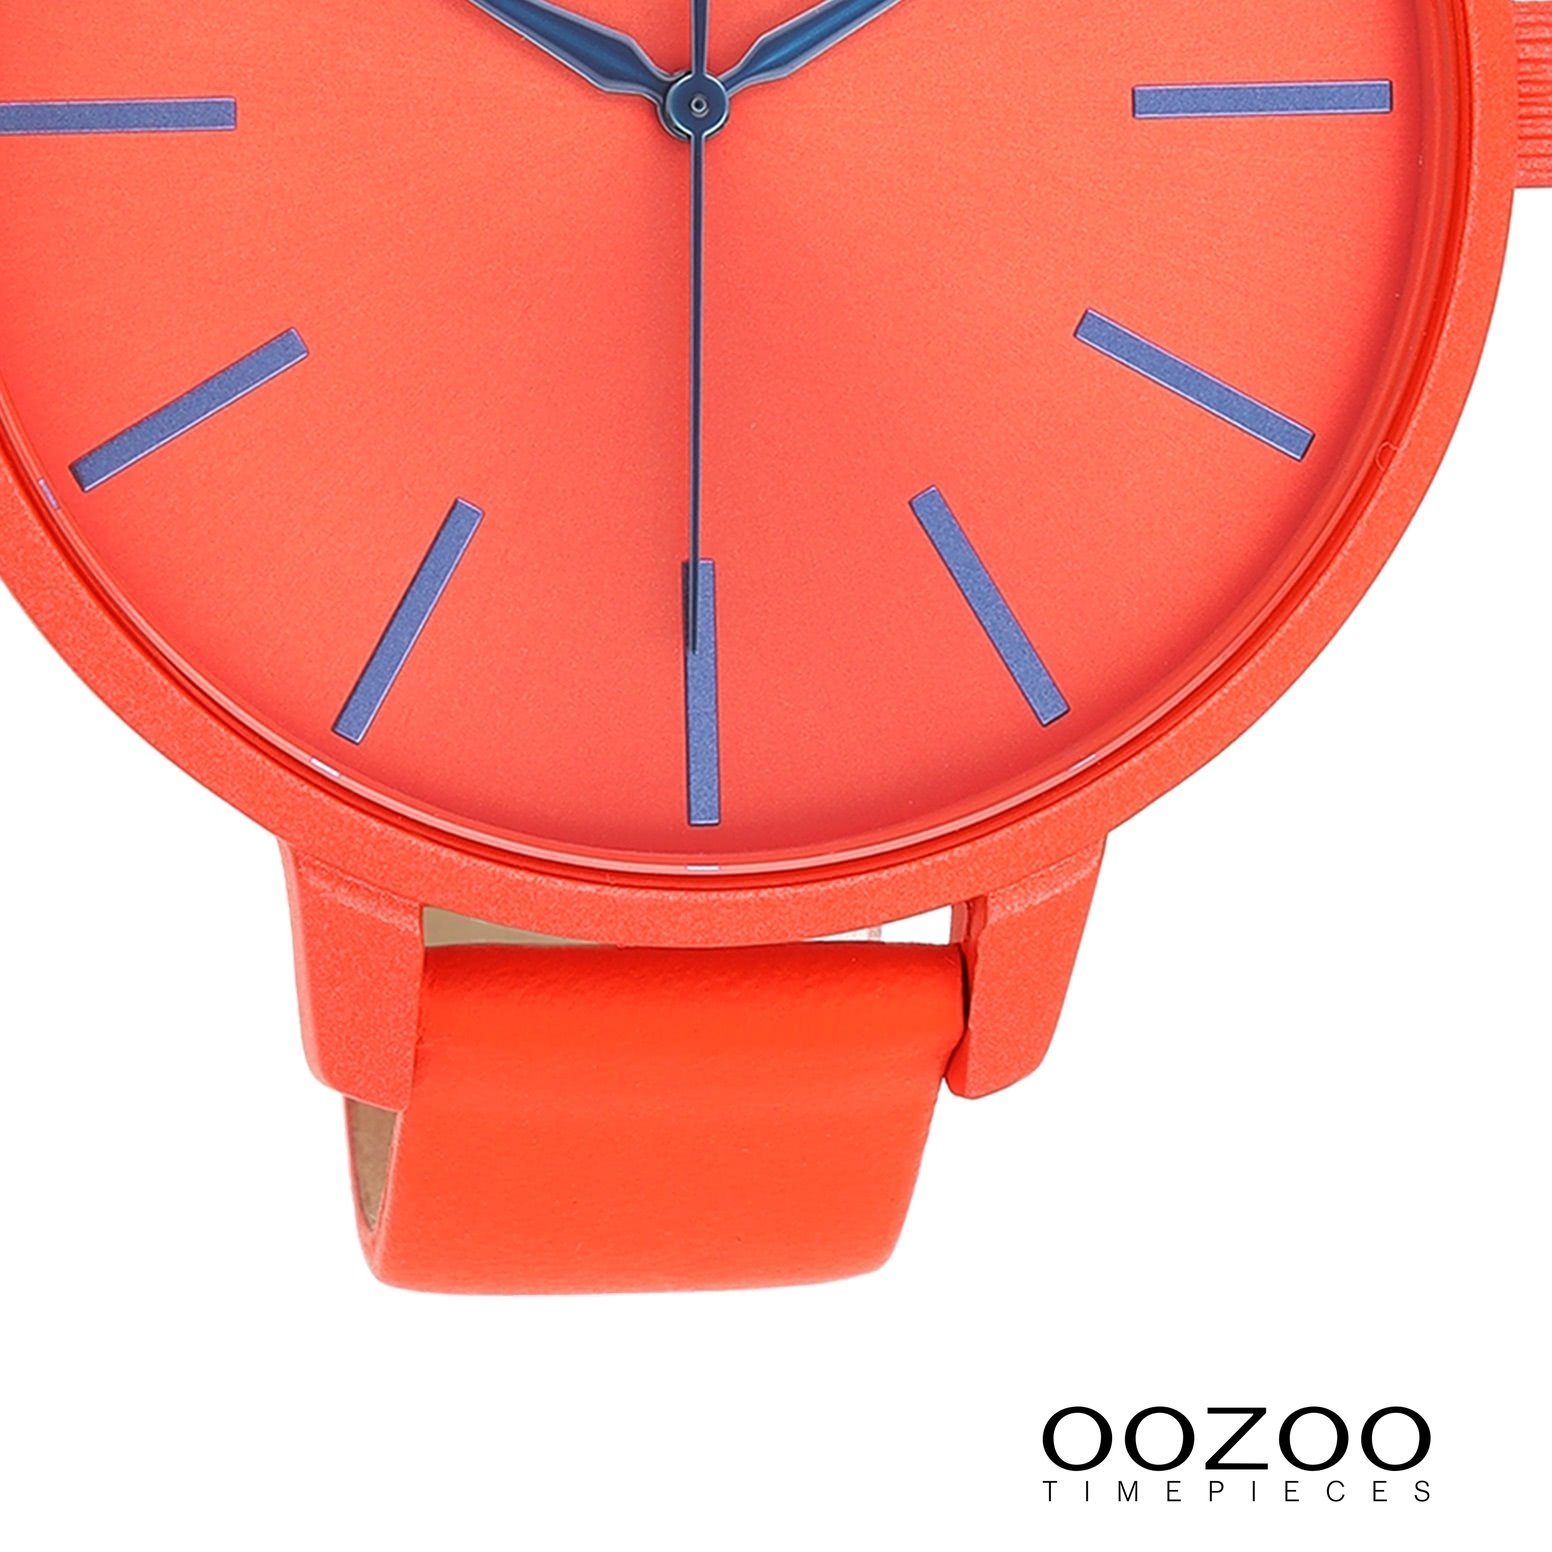 OOZOO Fashion rot,orange, Damen rund, Armbanduhr Quarzuhr groß Oozoo Analog, Lederarmband Damenuhr (ca. extra 48mm), Timepieces